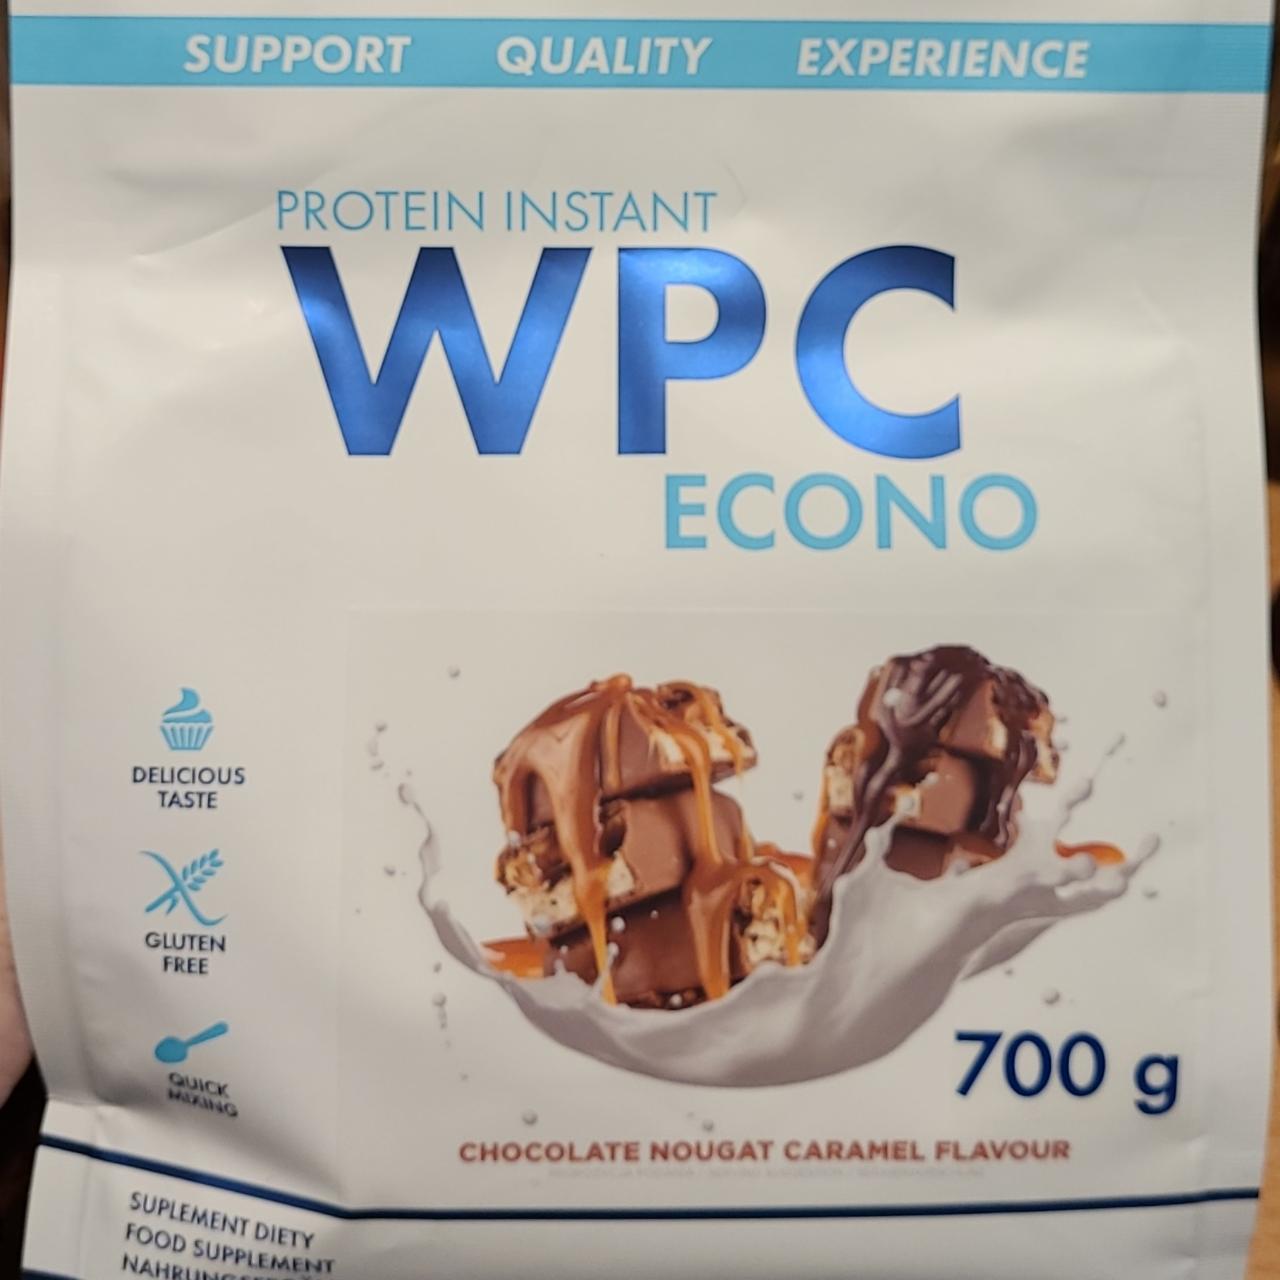 Zdjęcia - WPC ECONO chocolate nougat caramel flavour SFD Nutrition